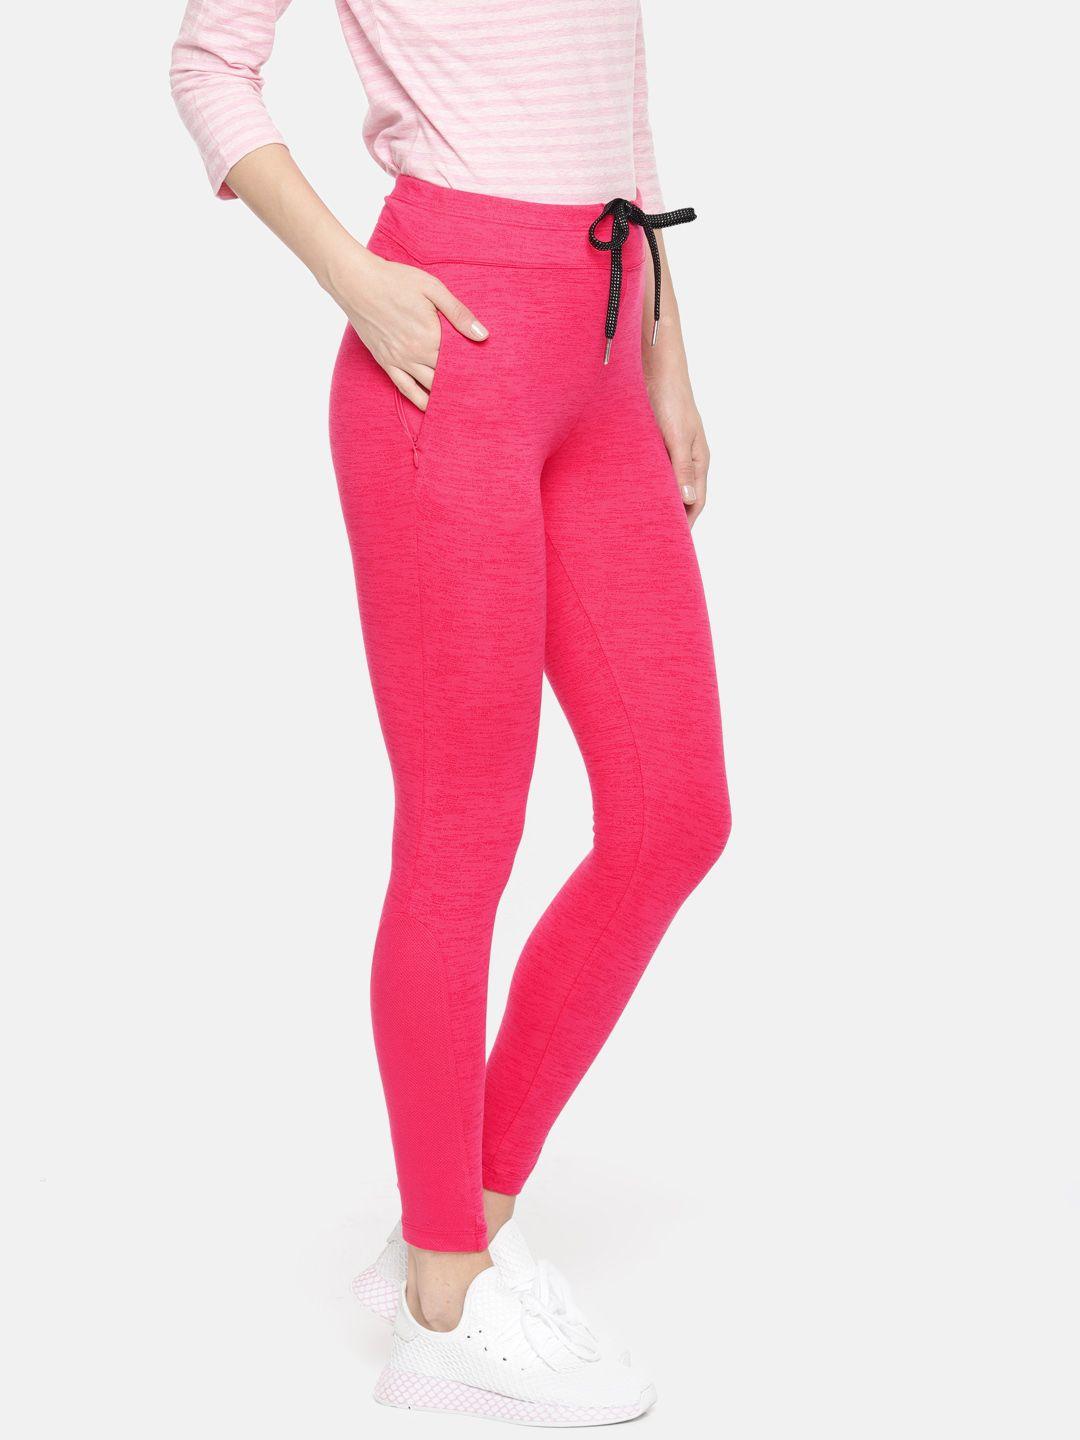 jockey-women-pink-solid-yoga-tights